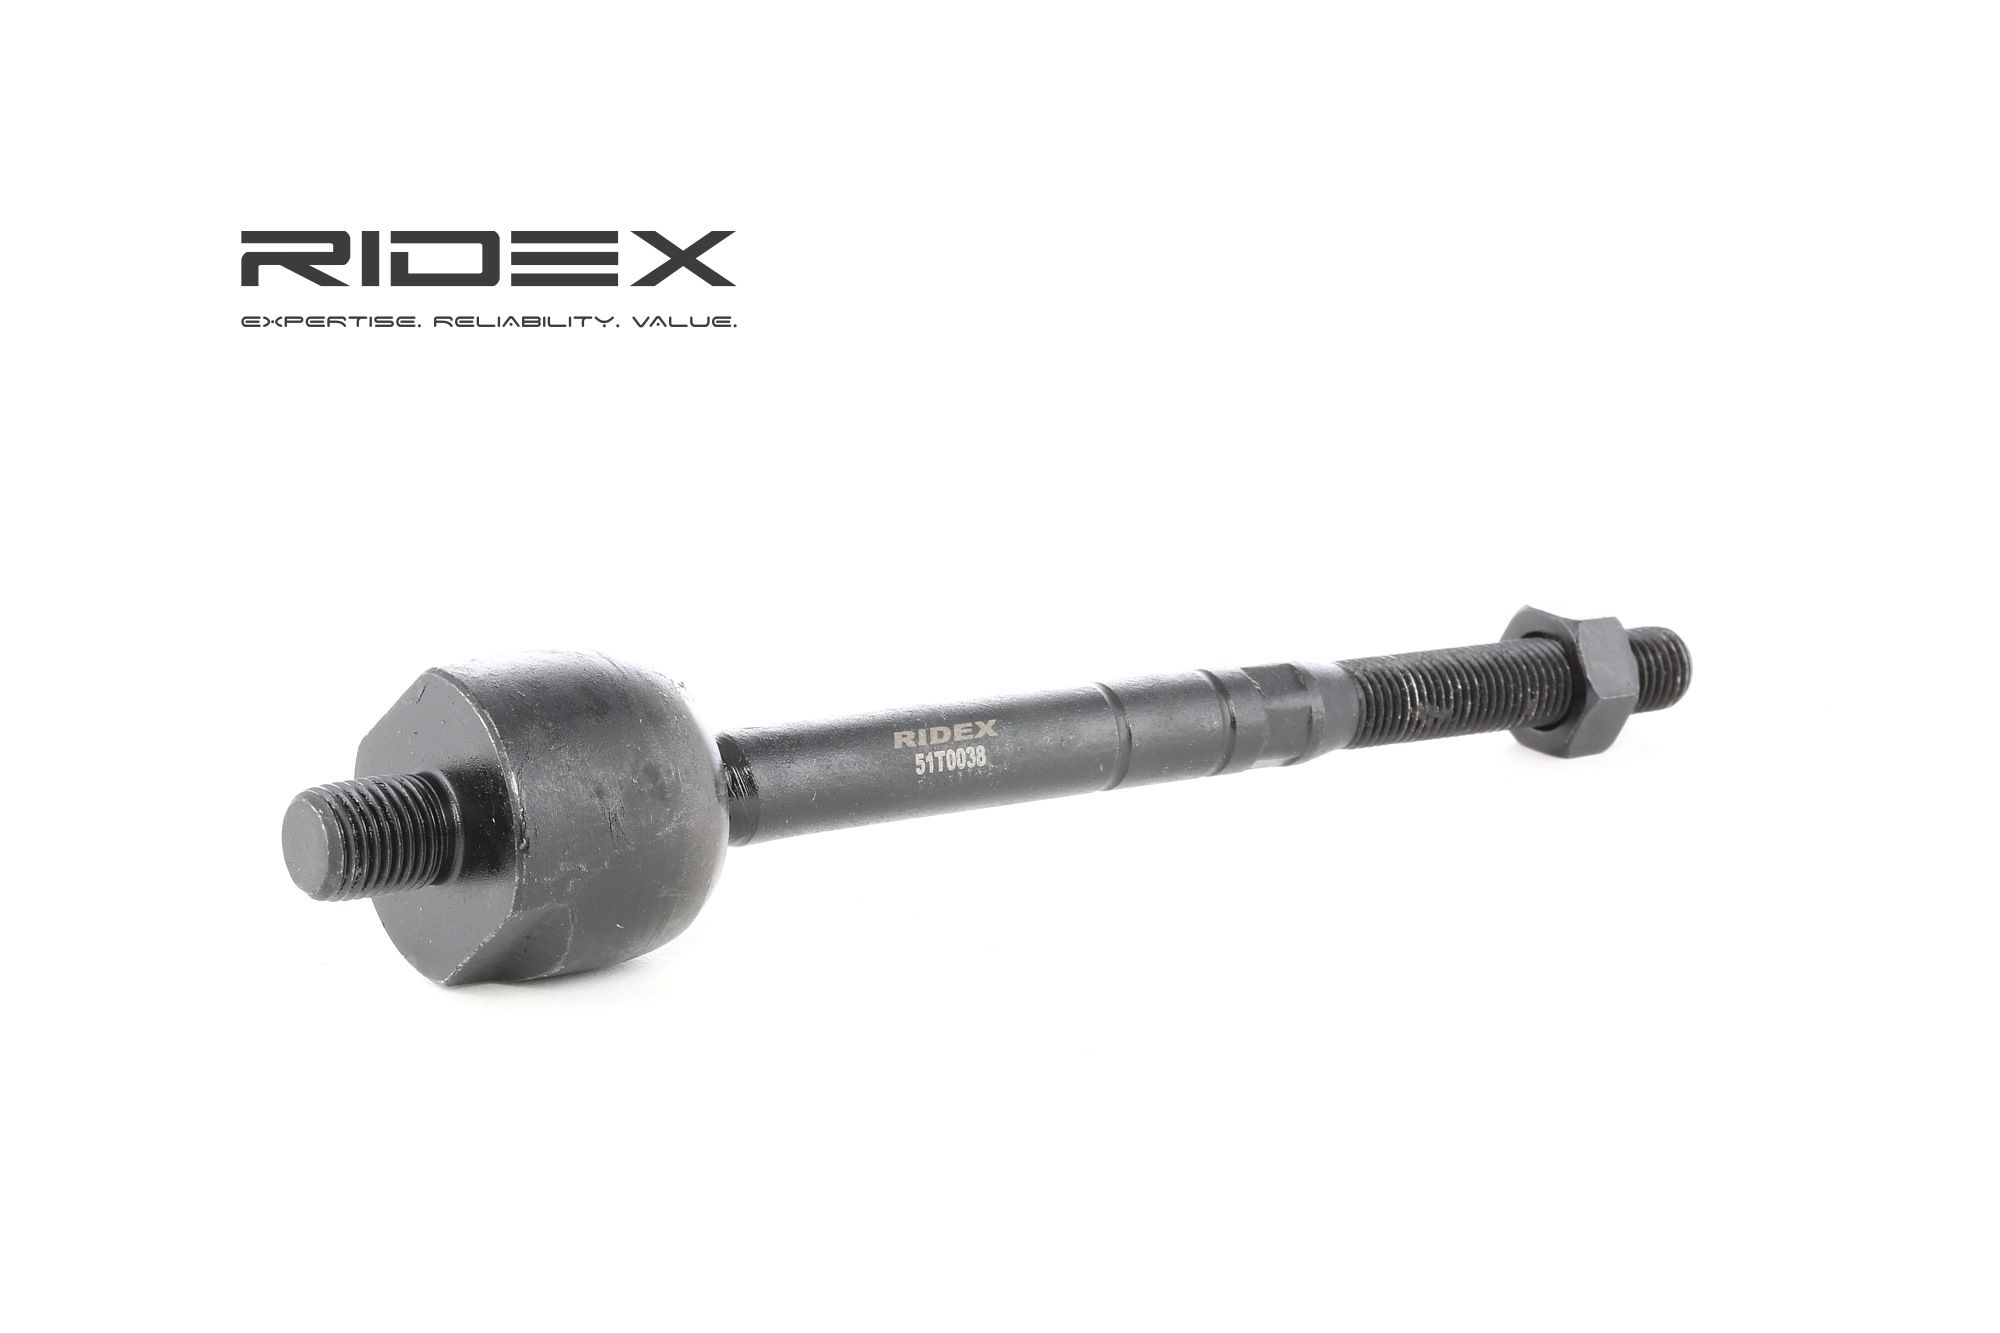 RIDEX Rotule Axiale MERCEDES-BENZ 51T0038 1683301335,A1683301335